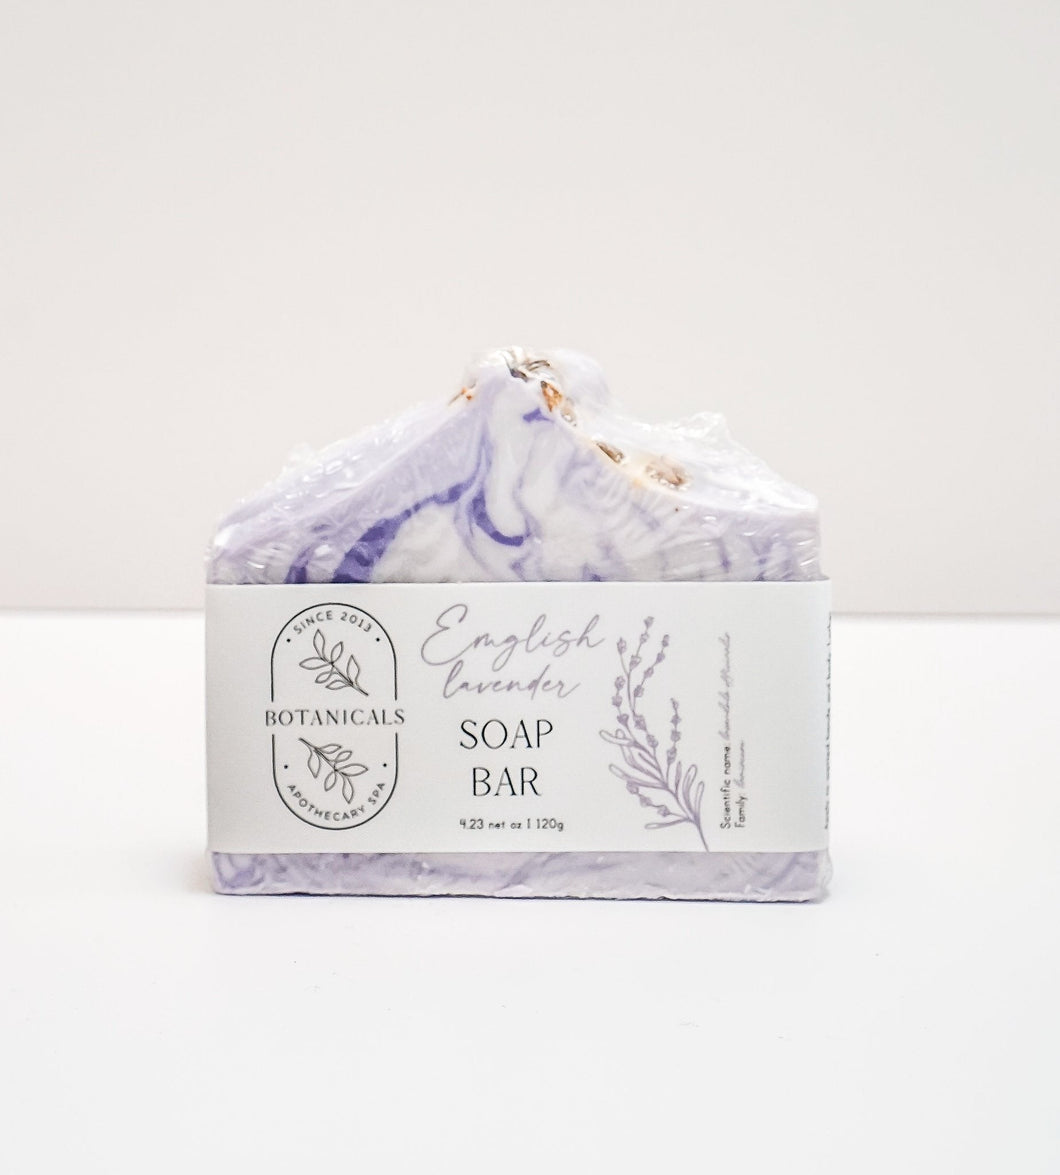 Bar Soap by Botanicals Spa - English Lavender - Saratoga Botanicals, LLC